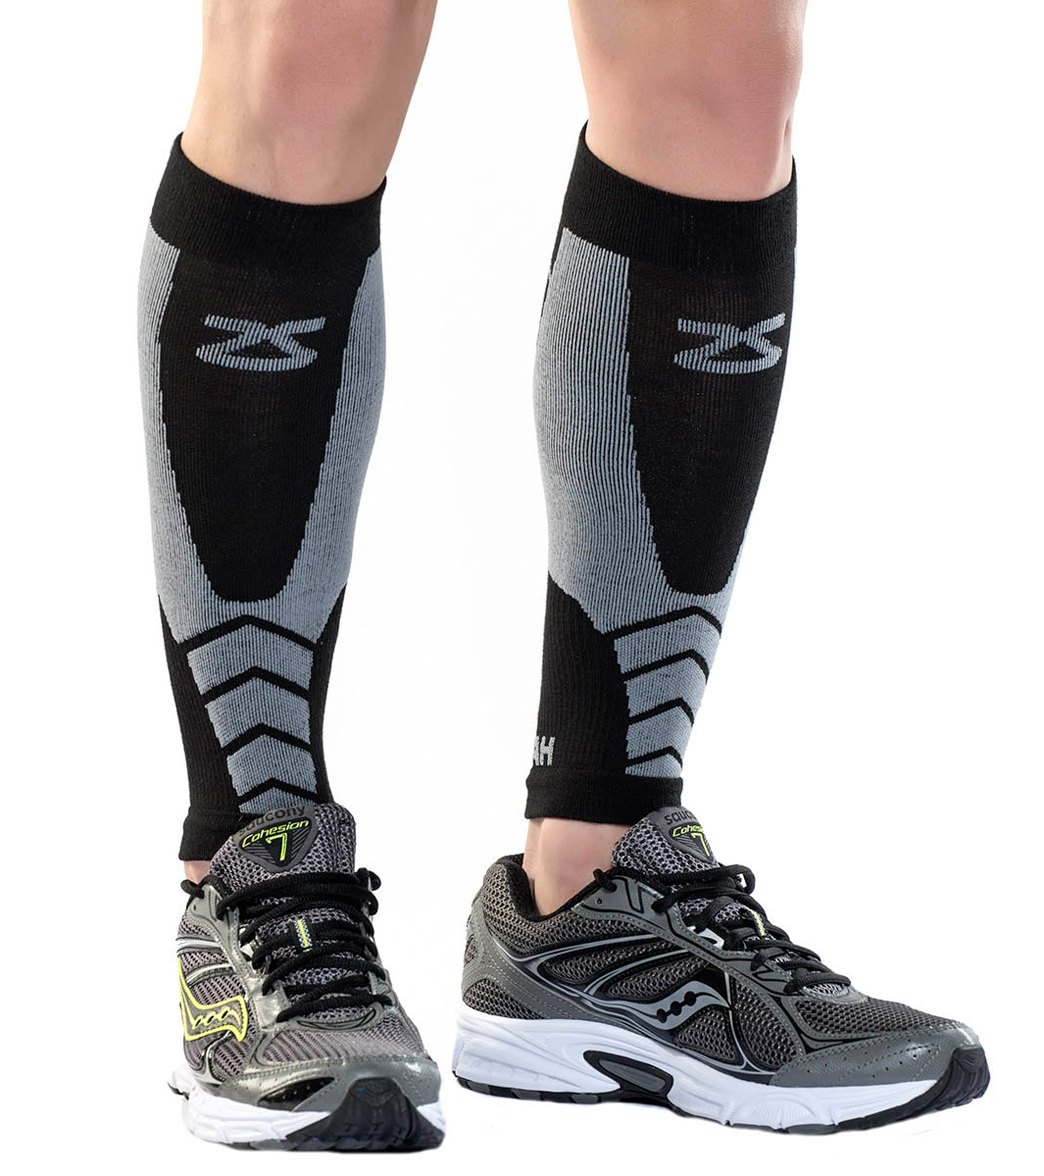 Zensah Wool Compression Leg Sleeves - Black Small Polyamide/Spandex - Swimoutlet.com